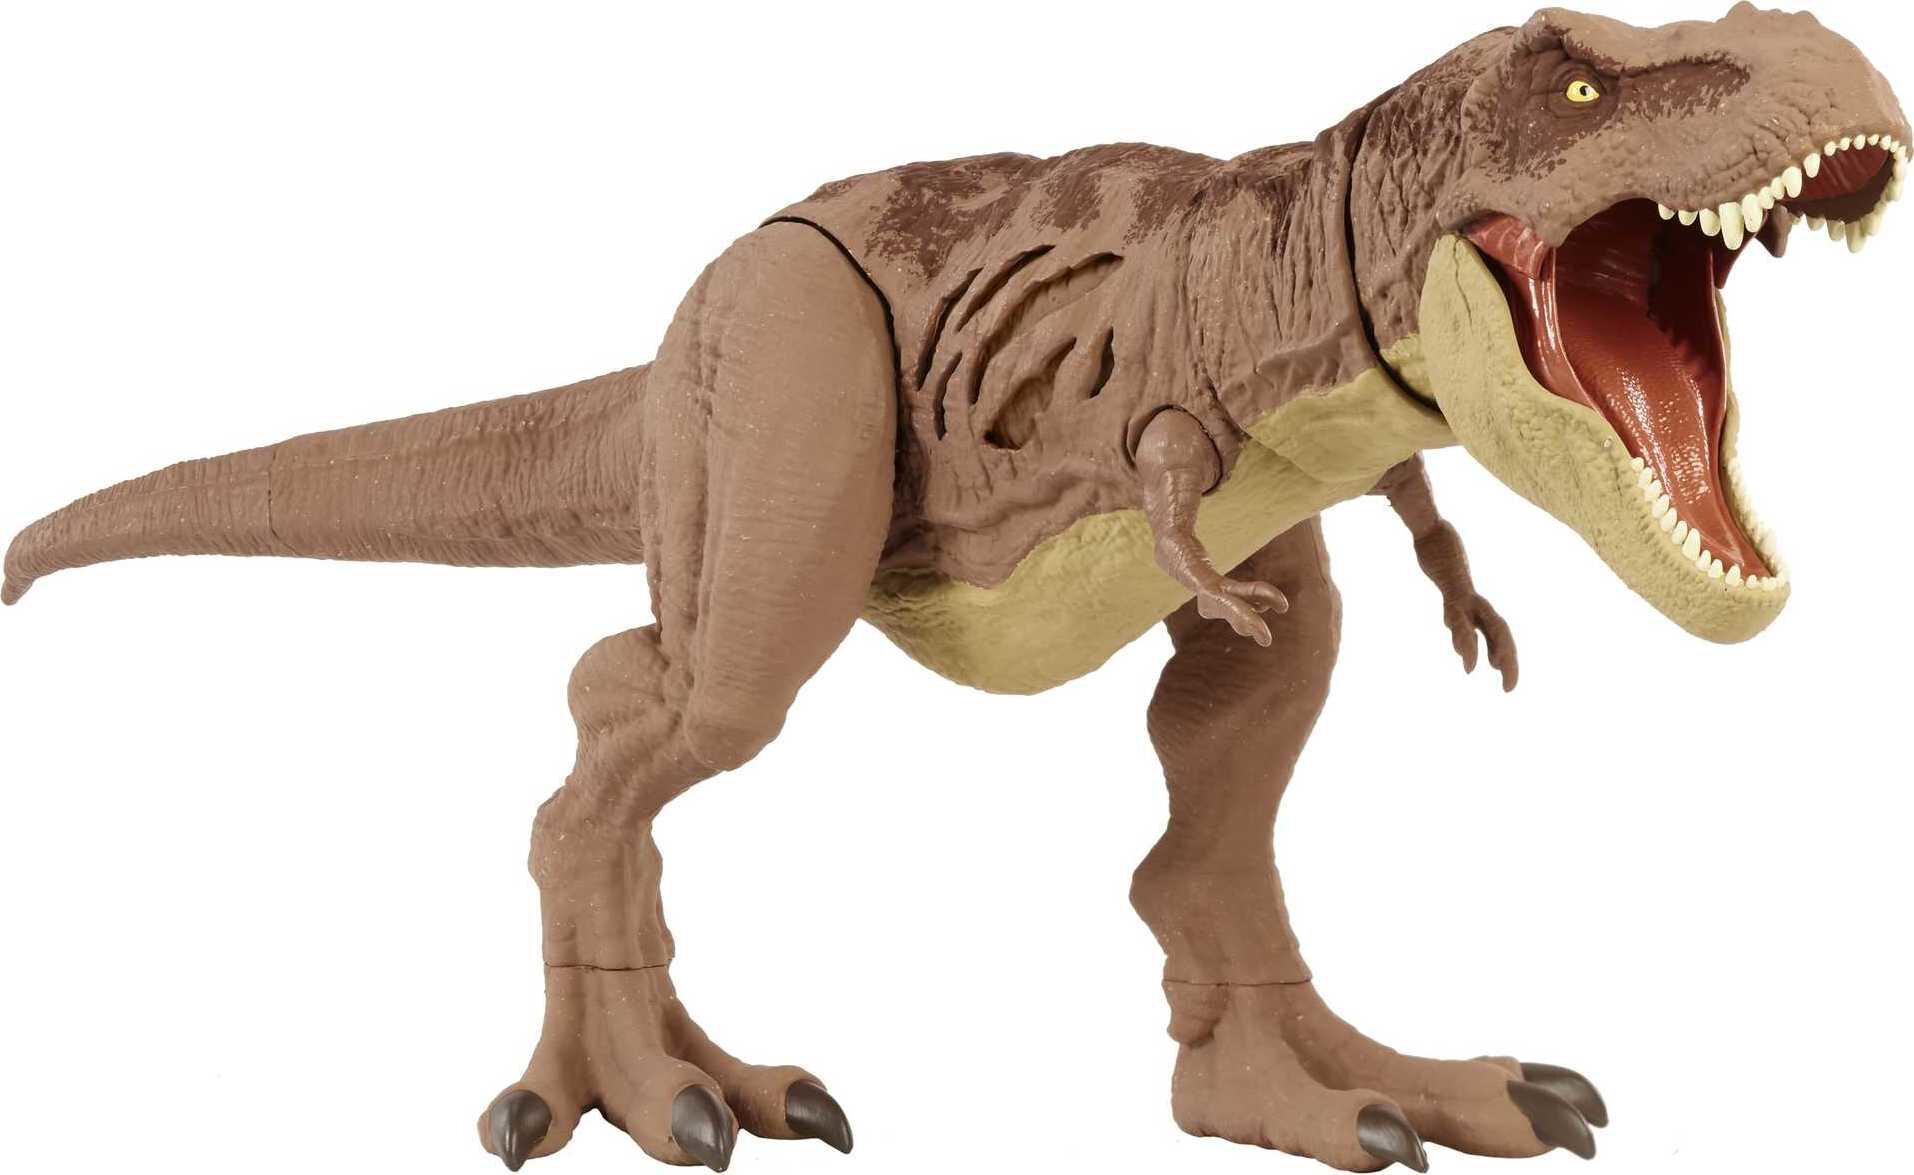 Jurassic World Extreme Damage Tyrannosaurus Rex Action Figure, Transforming Dinosaur Toy with Motion - image 3 of 6